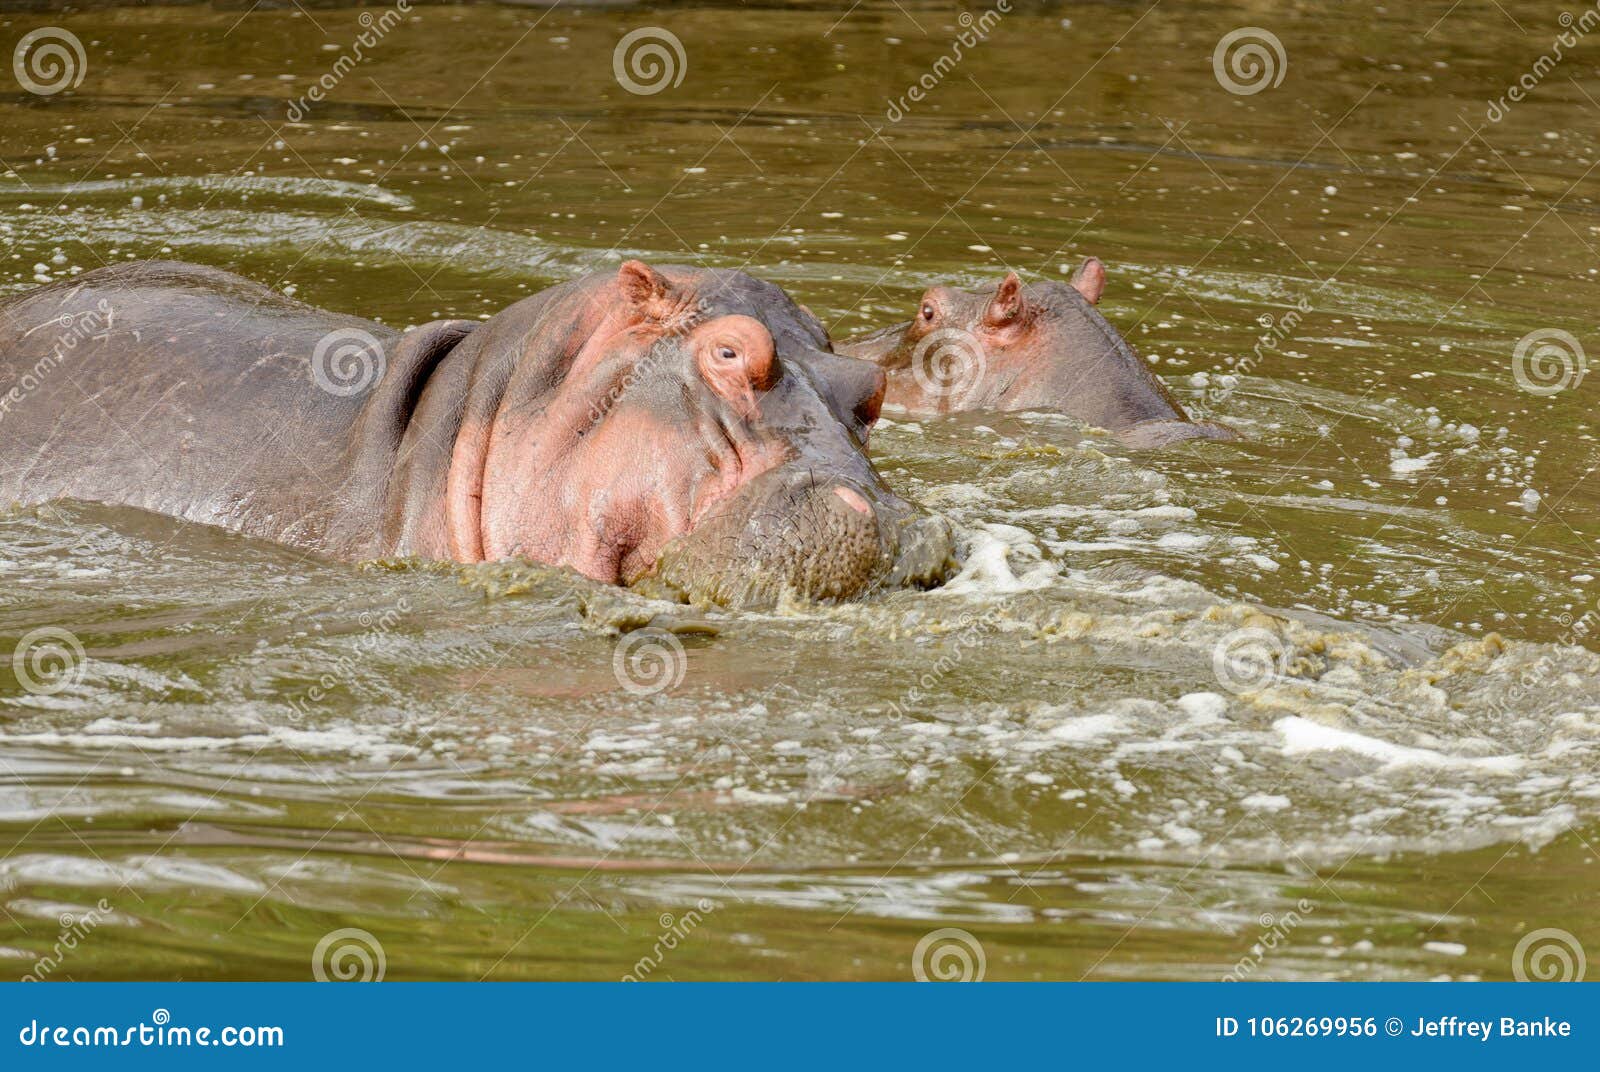 closeup of hippopotamus in water playing